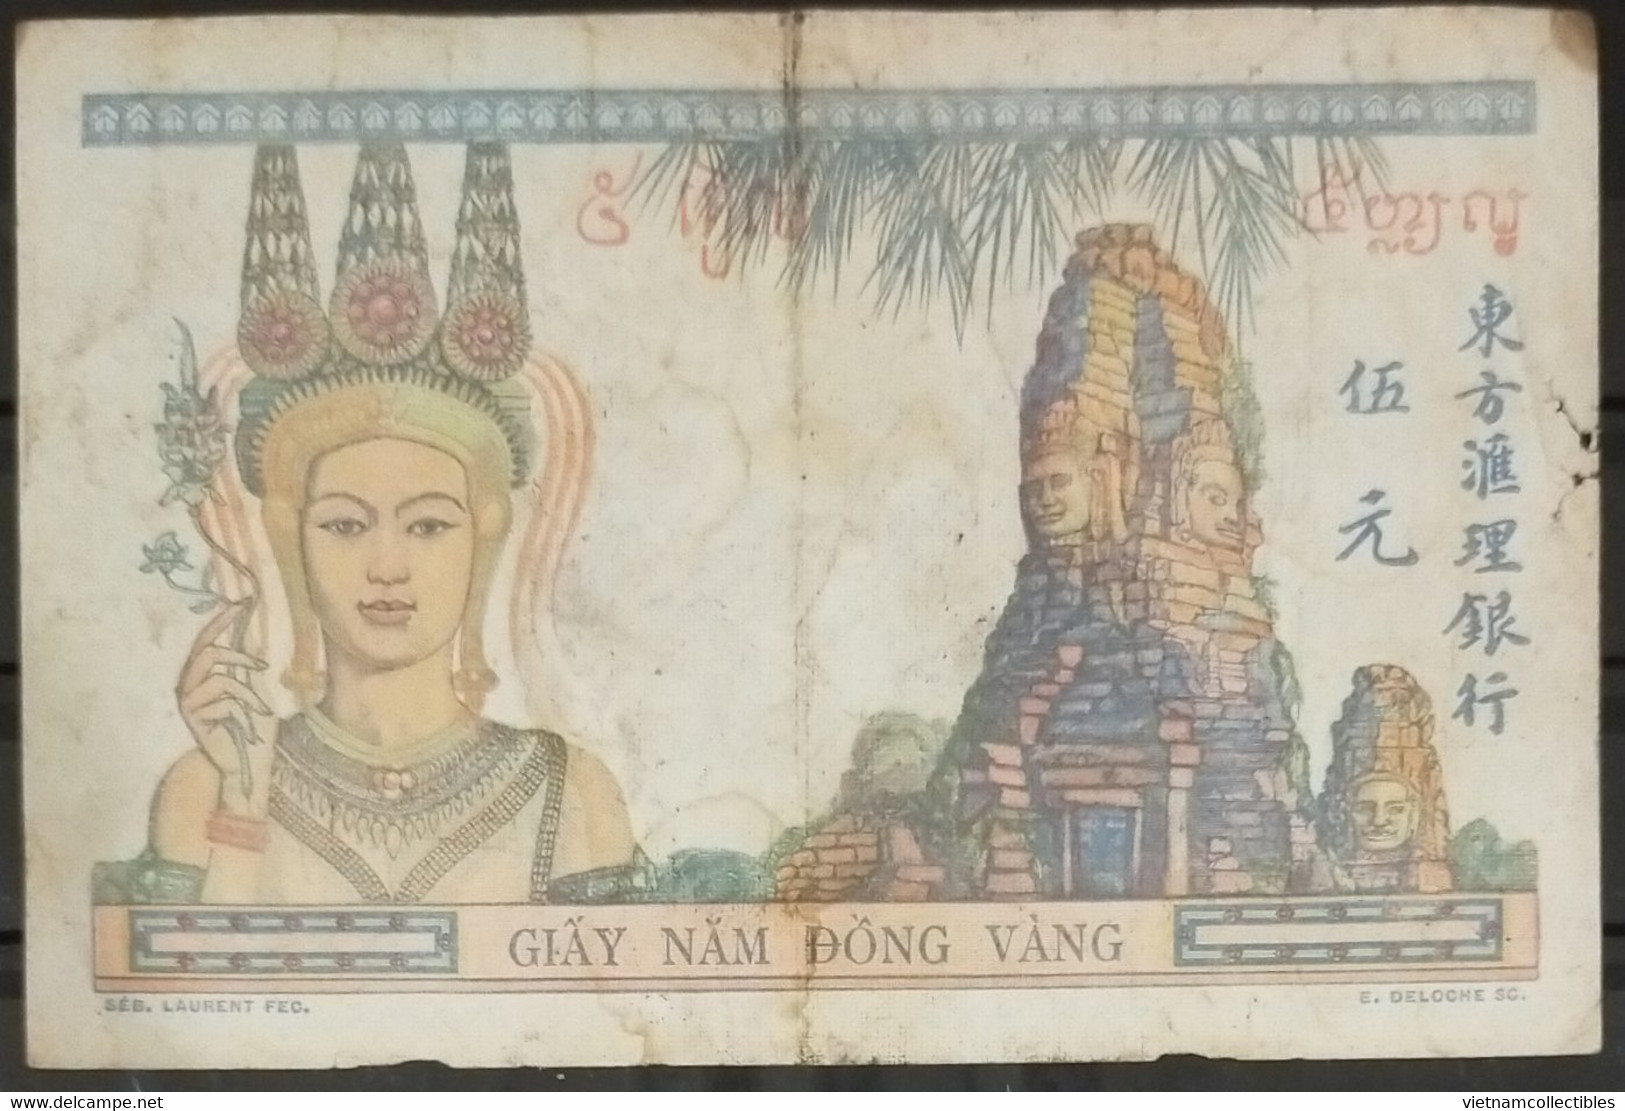 French Indochina Indo China Indochine Laos Vietnam Cambodia 5 Piastres VF Banknote Note 1936-39 - Pick # 55b / 2 Photos - Indochina